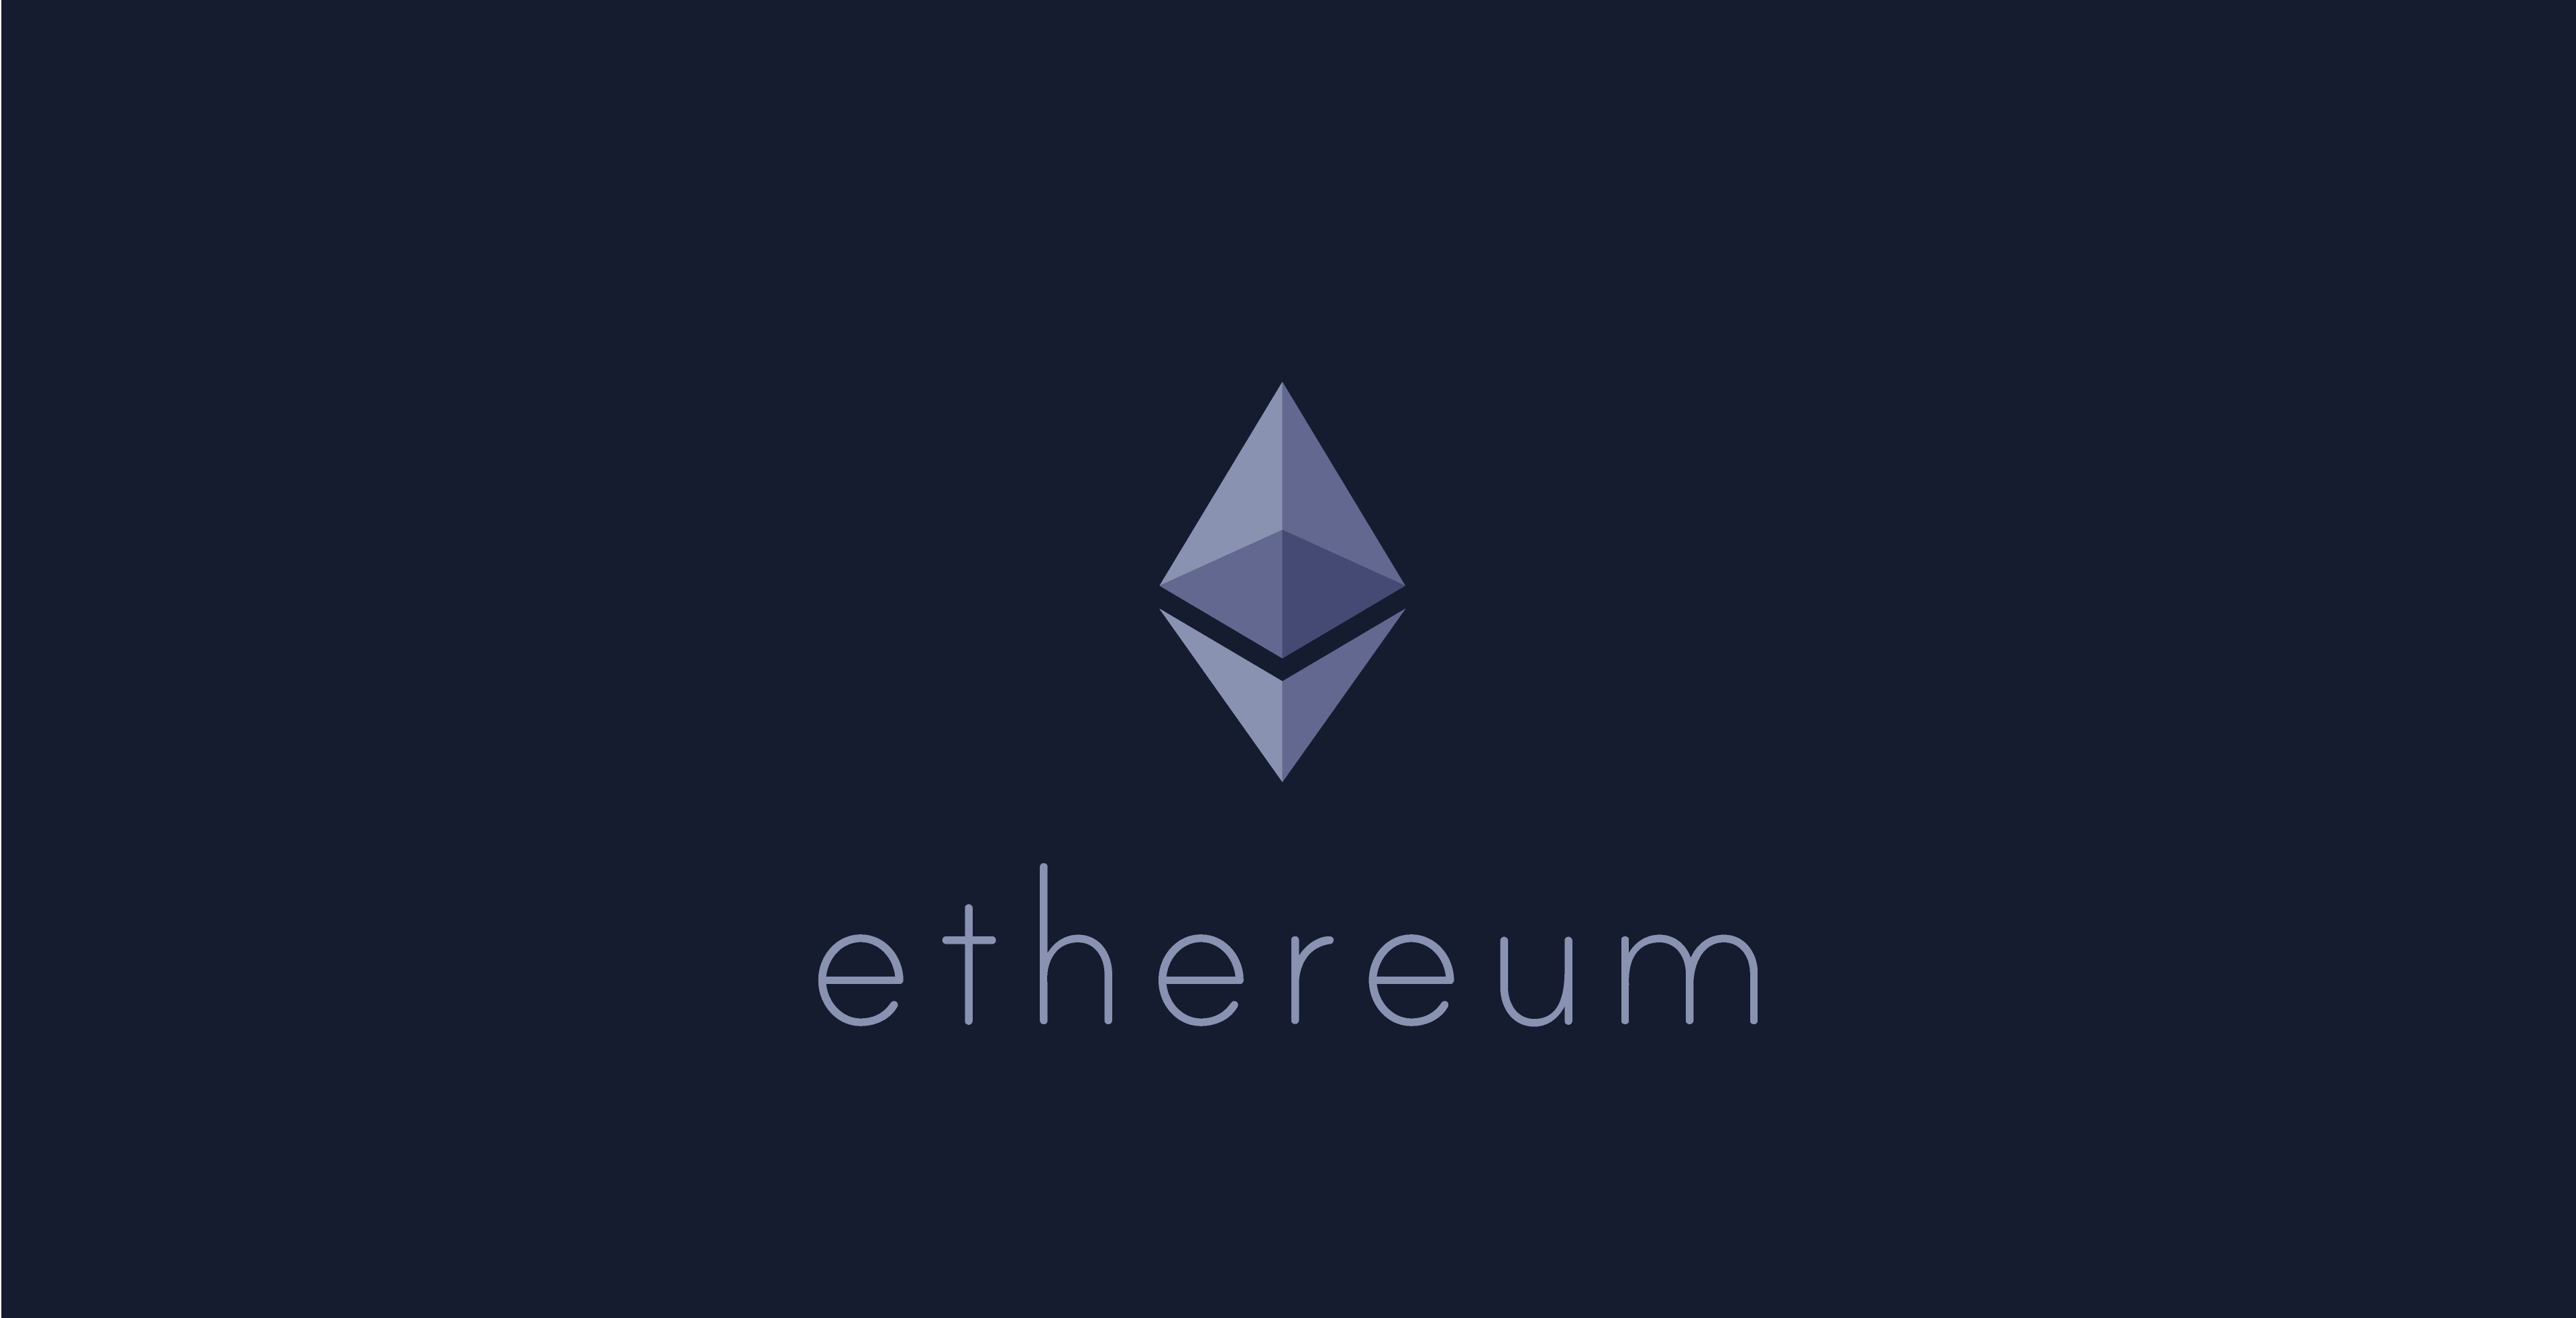 Venture into Ethereum - The World Computer